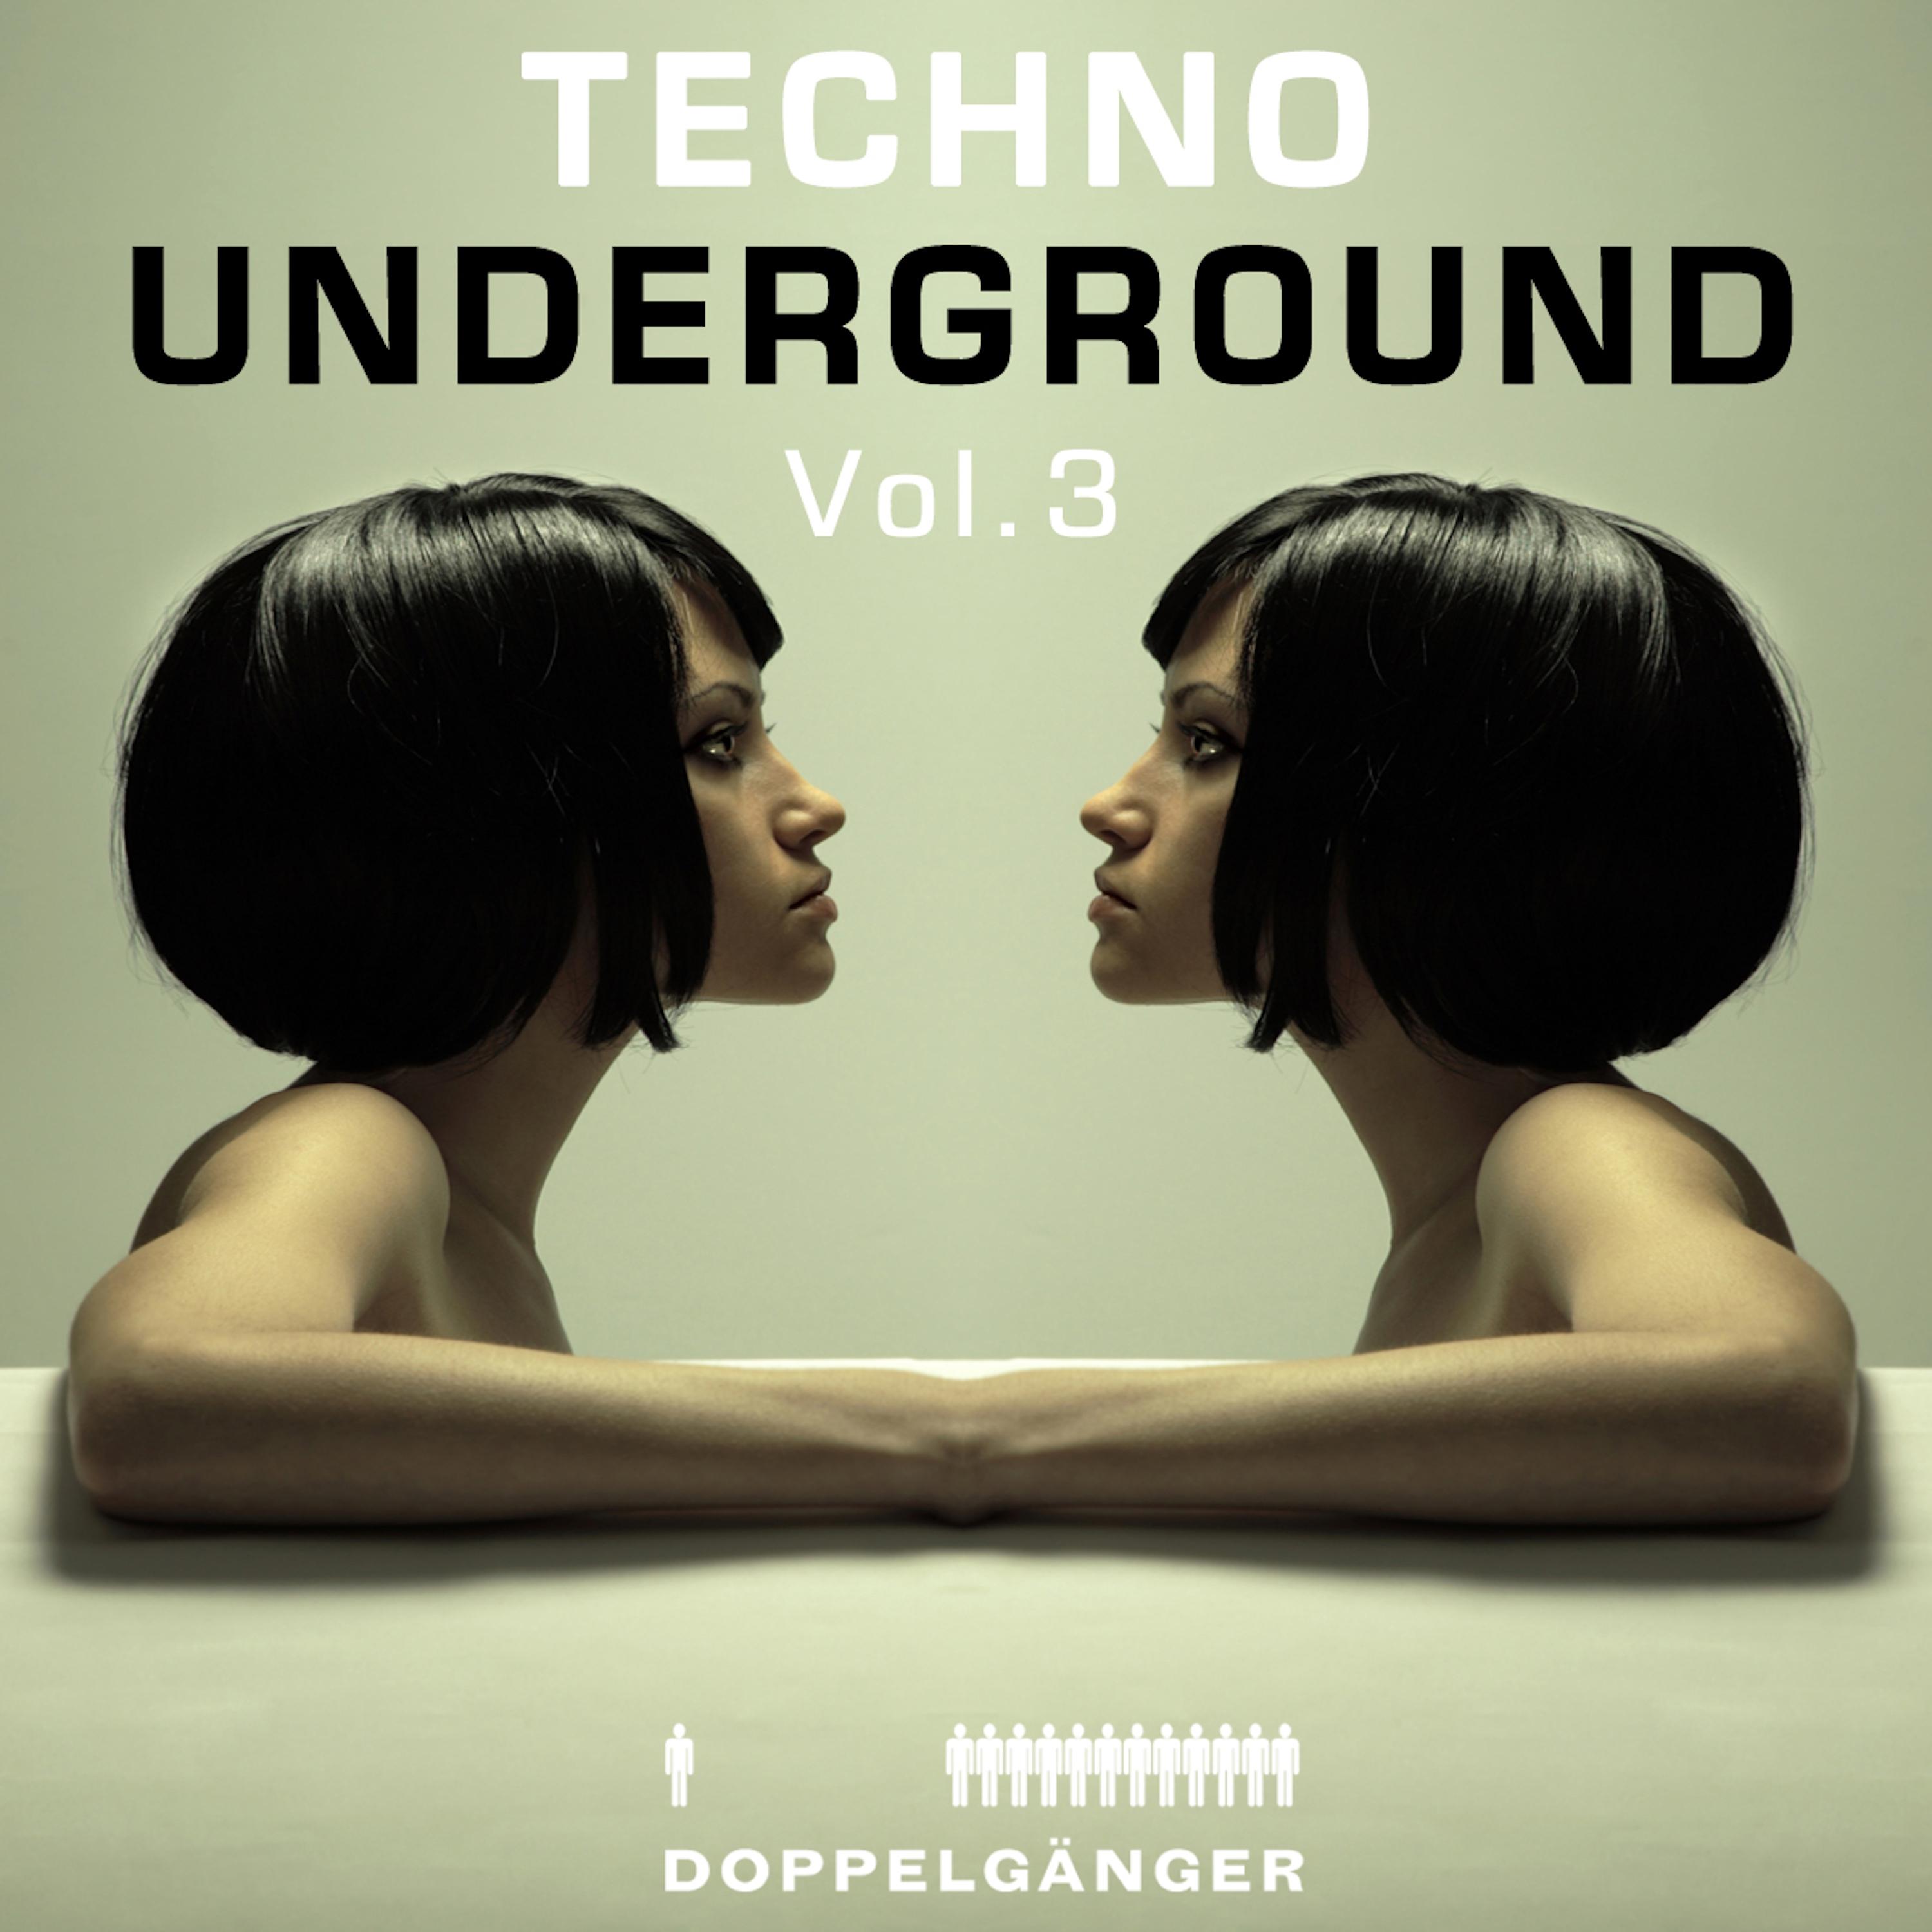 Doppelgänger pres. Techno Underground Vol. 3